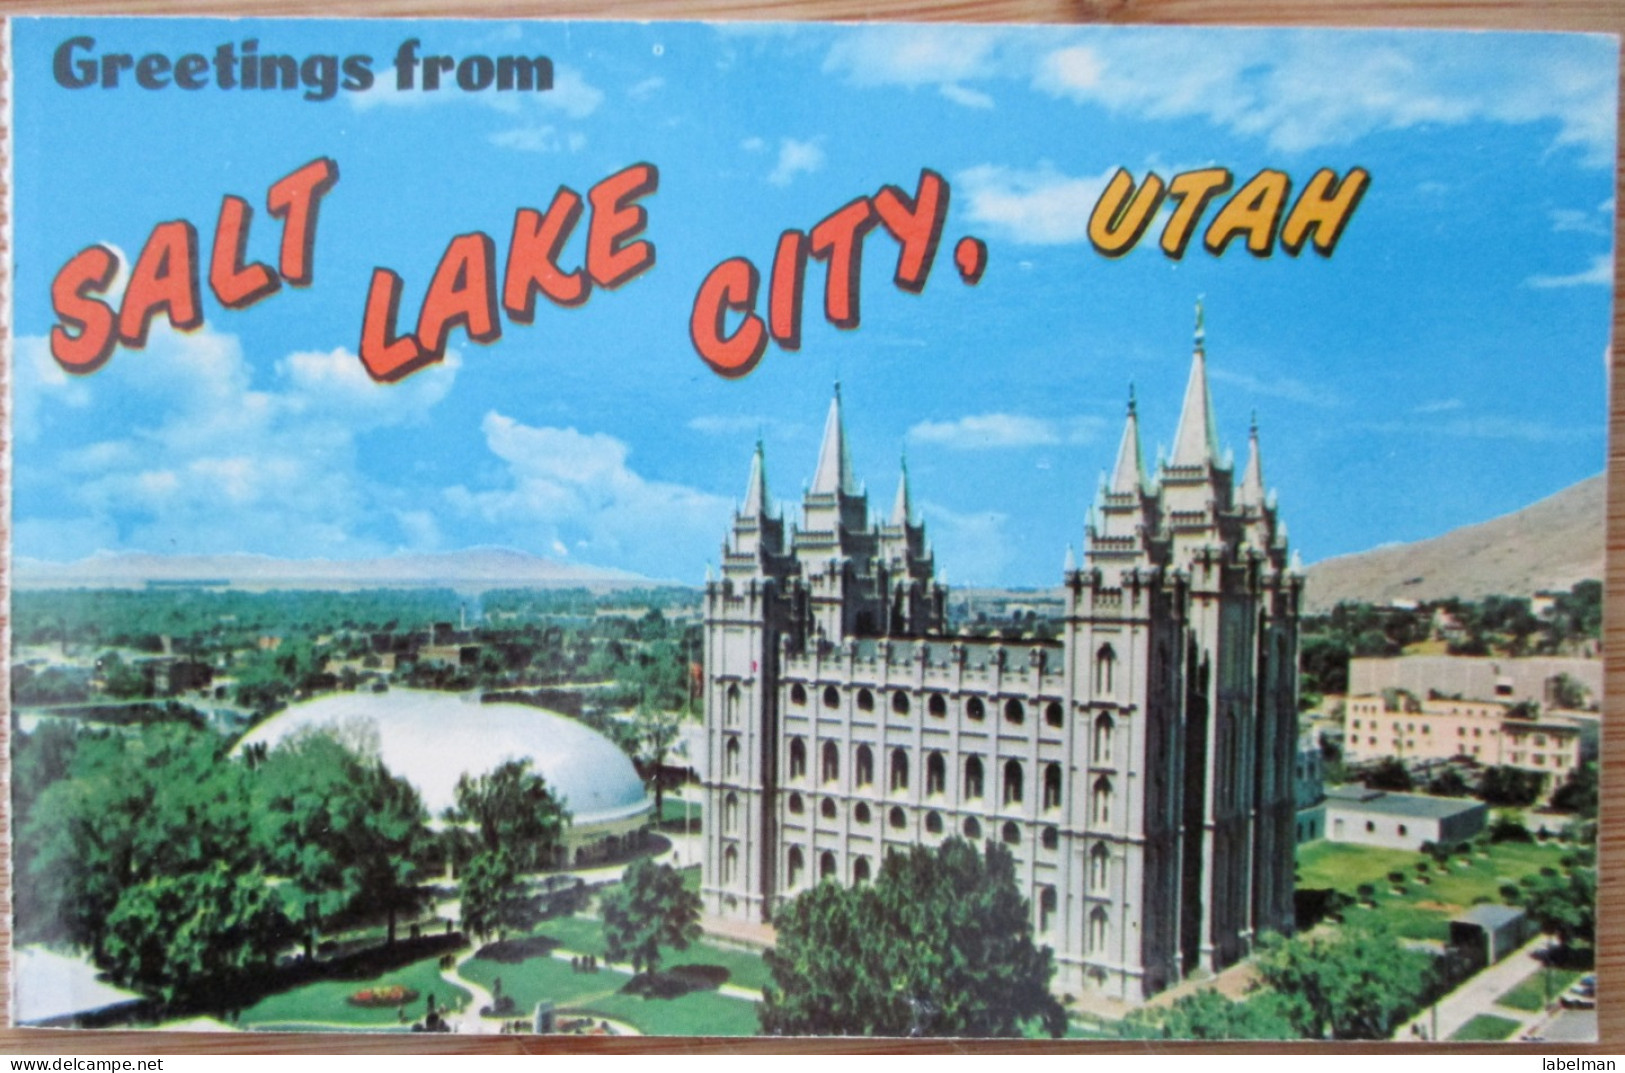 JESUS CHURCH TEMPLE SQUARE UTAH LAKE CITY USA UNITED STATES CARD ANSICHTSKARTE CARTOLINA POSTCARD PC STAMP - Salt Lake City